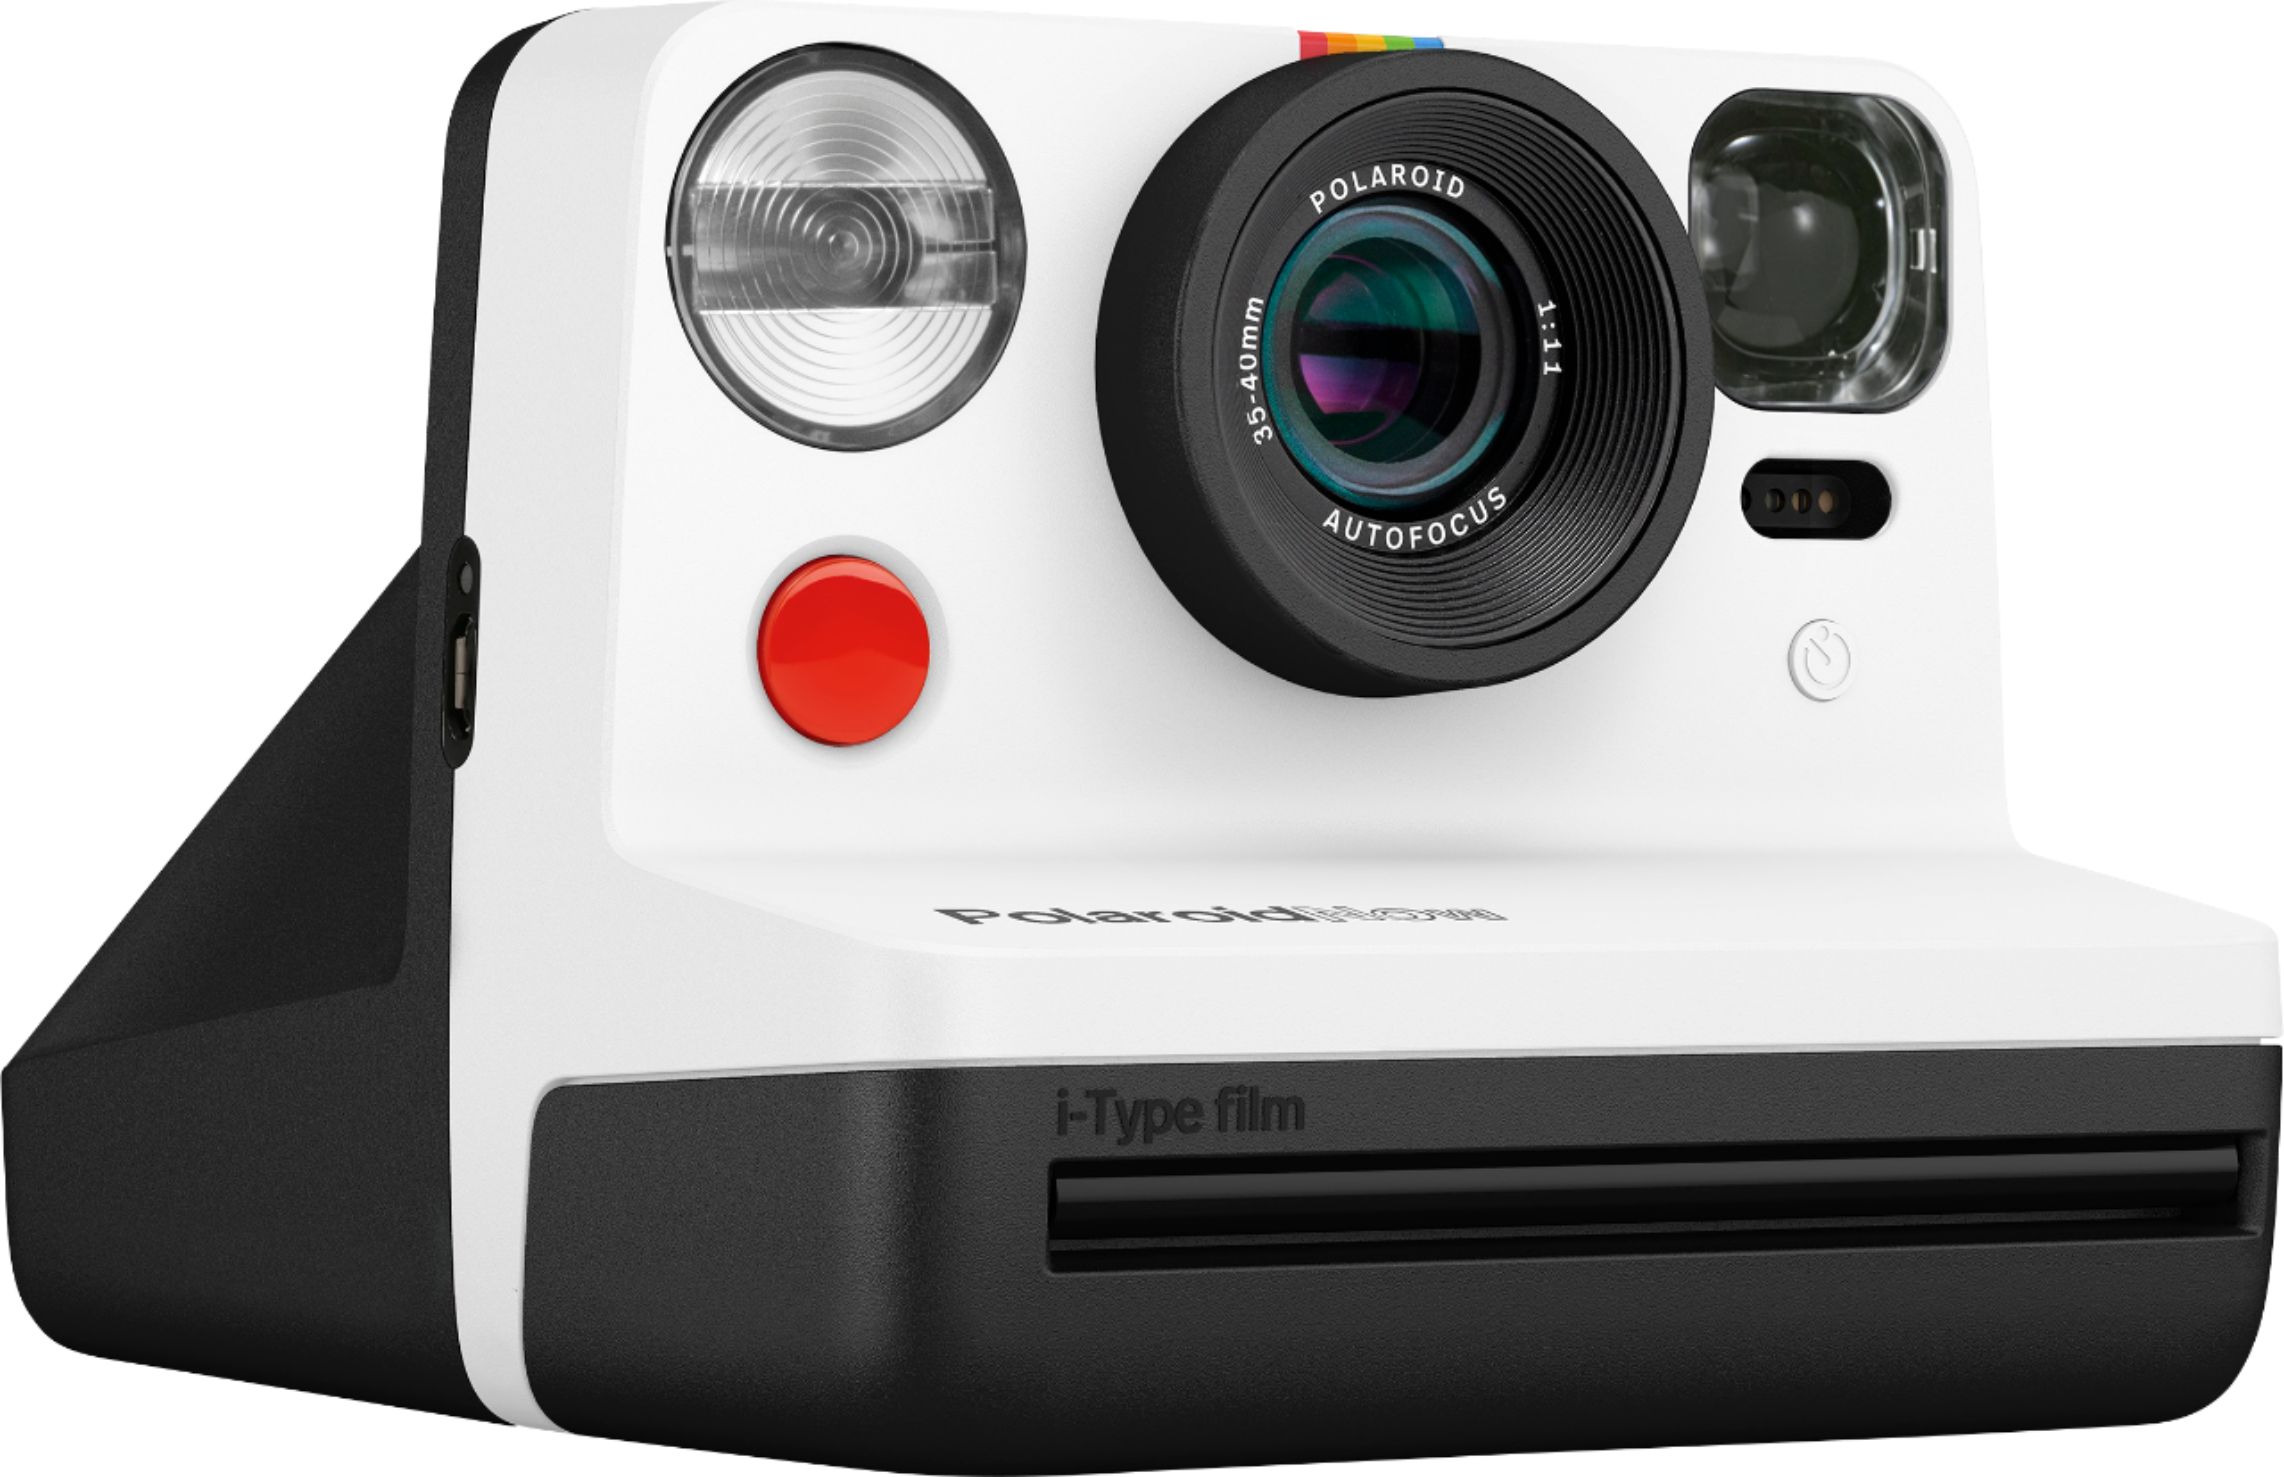 Polaroid Originals NOW i-Type Instant Camera - Black and White (PRD9059)